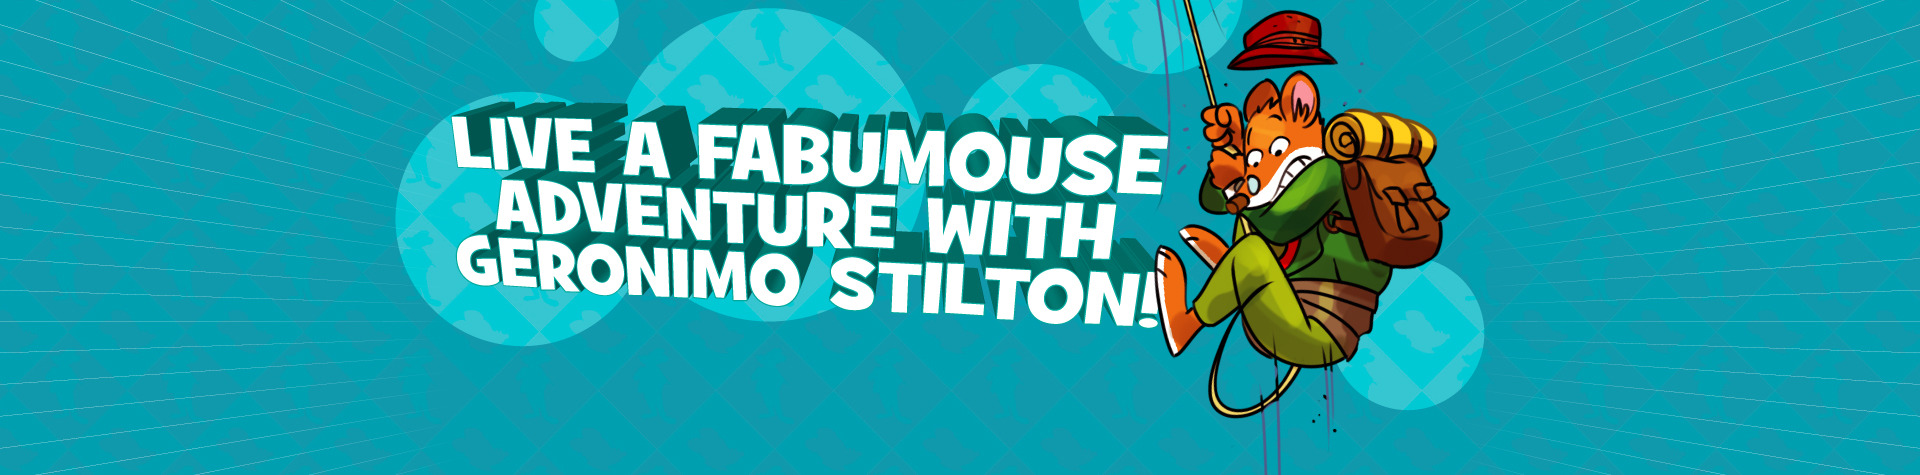 Live an adventure with Geronimo Stilton!